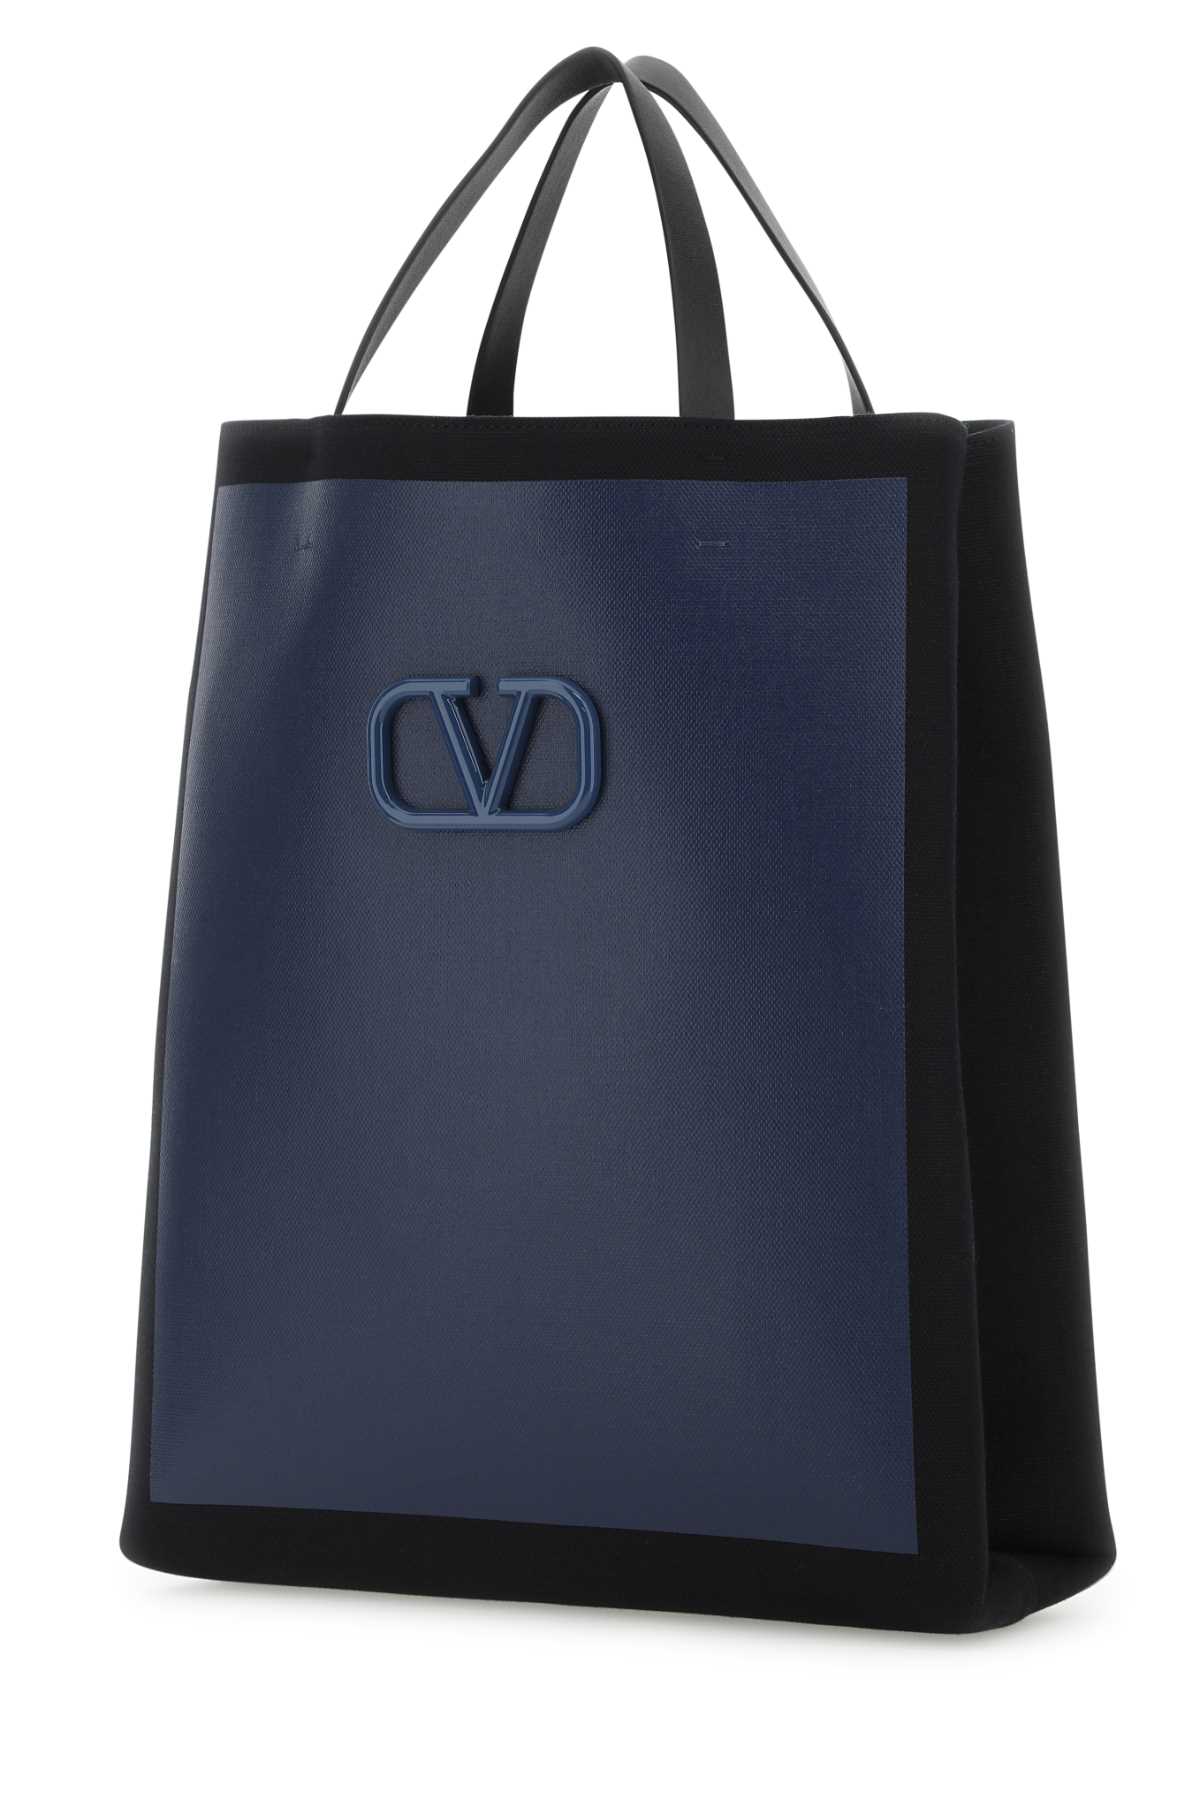 Valentino Garavani Two-tone Canvas Vlogo Signature Shopping Bag In Uys